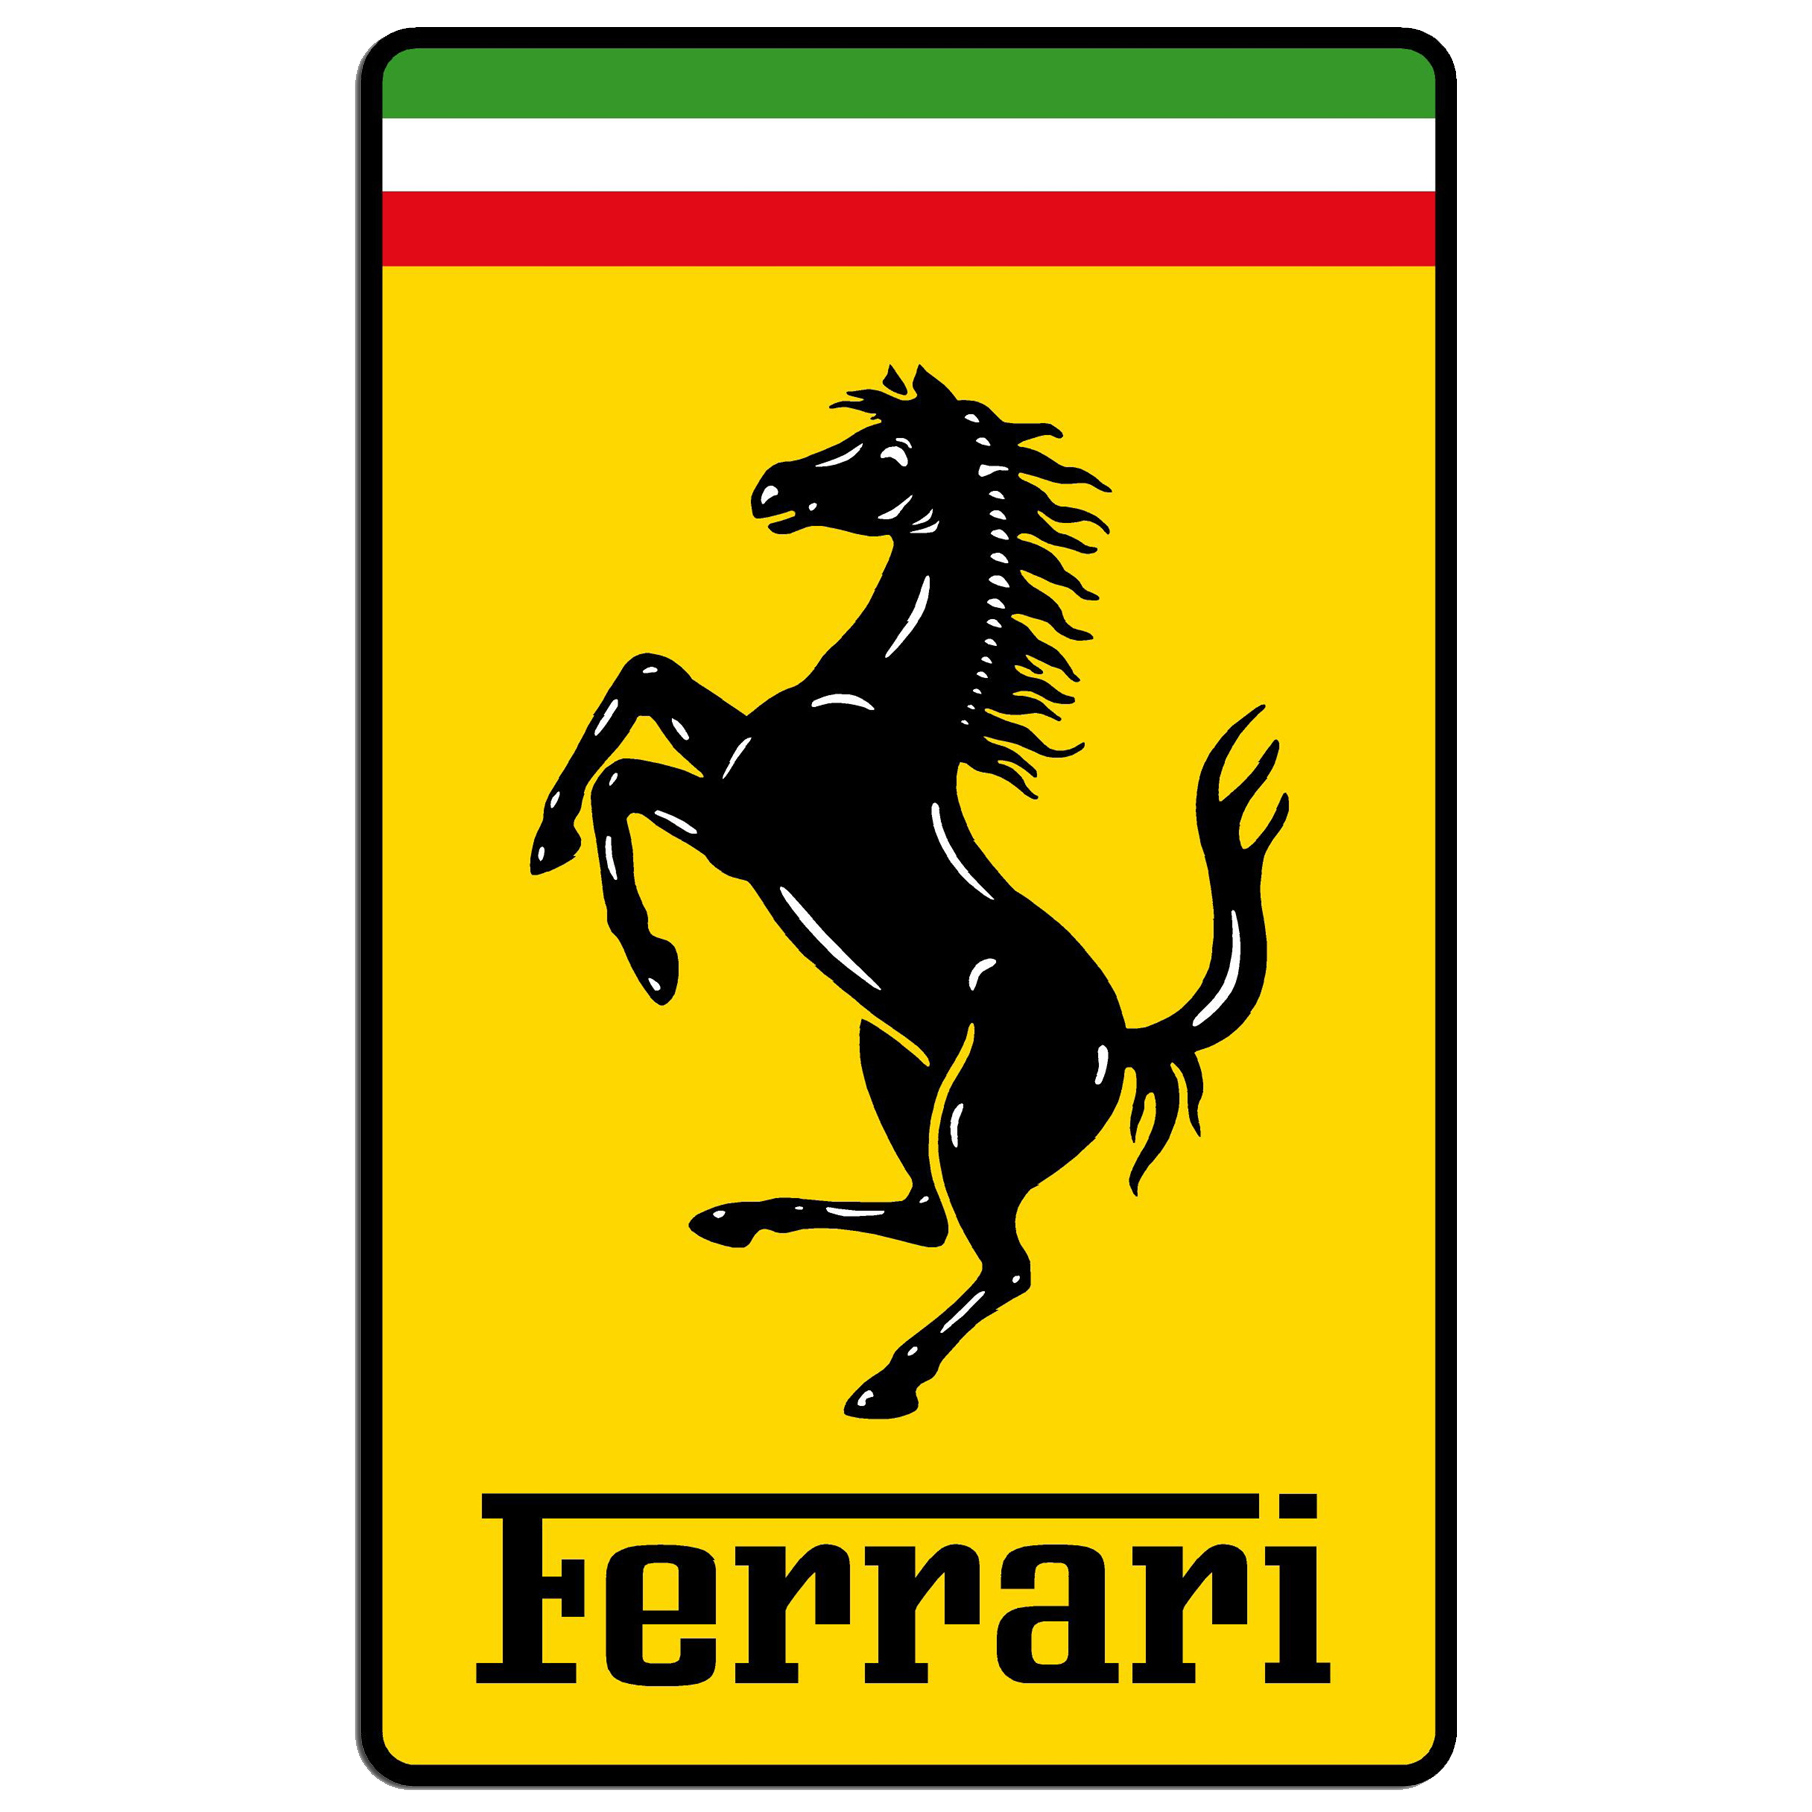 Ferrari 488 for sale